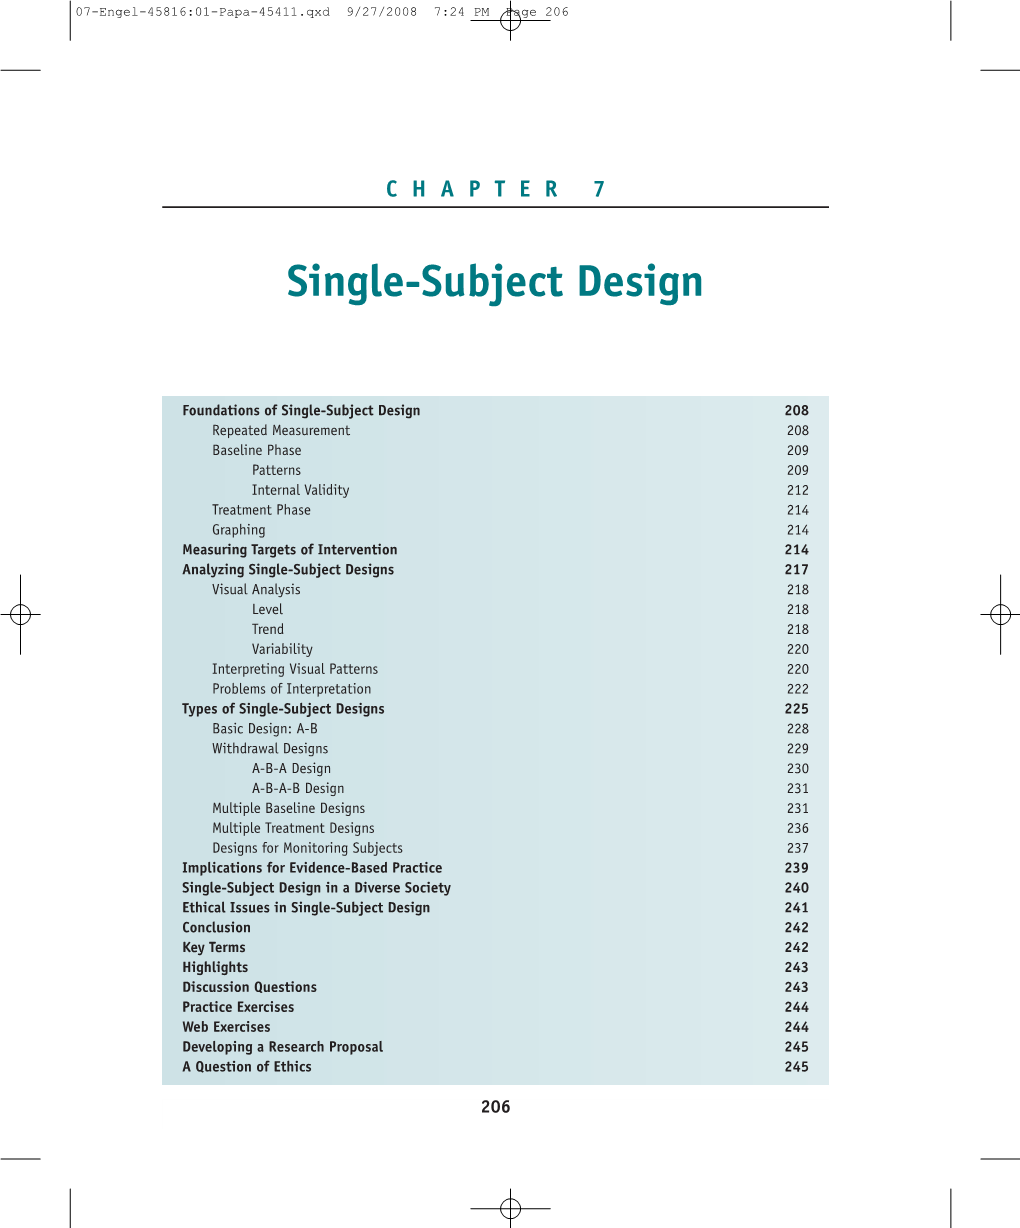 Single-Subject Design